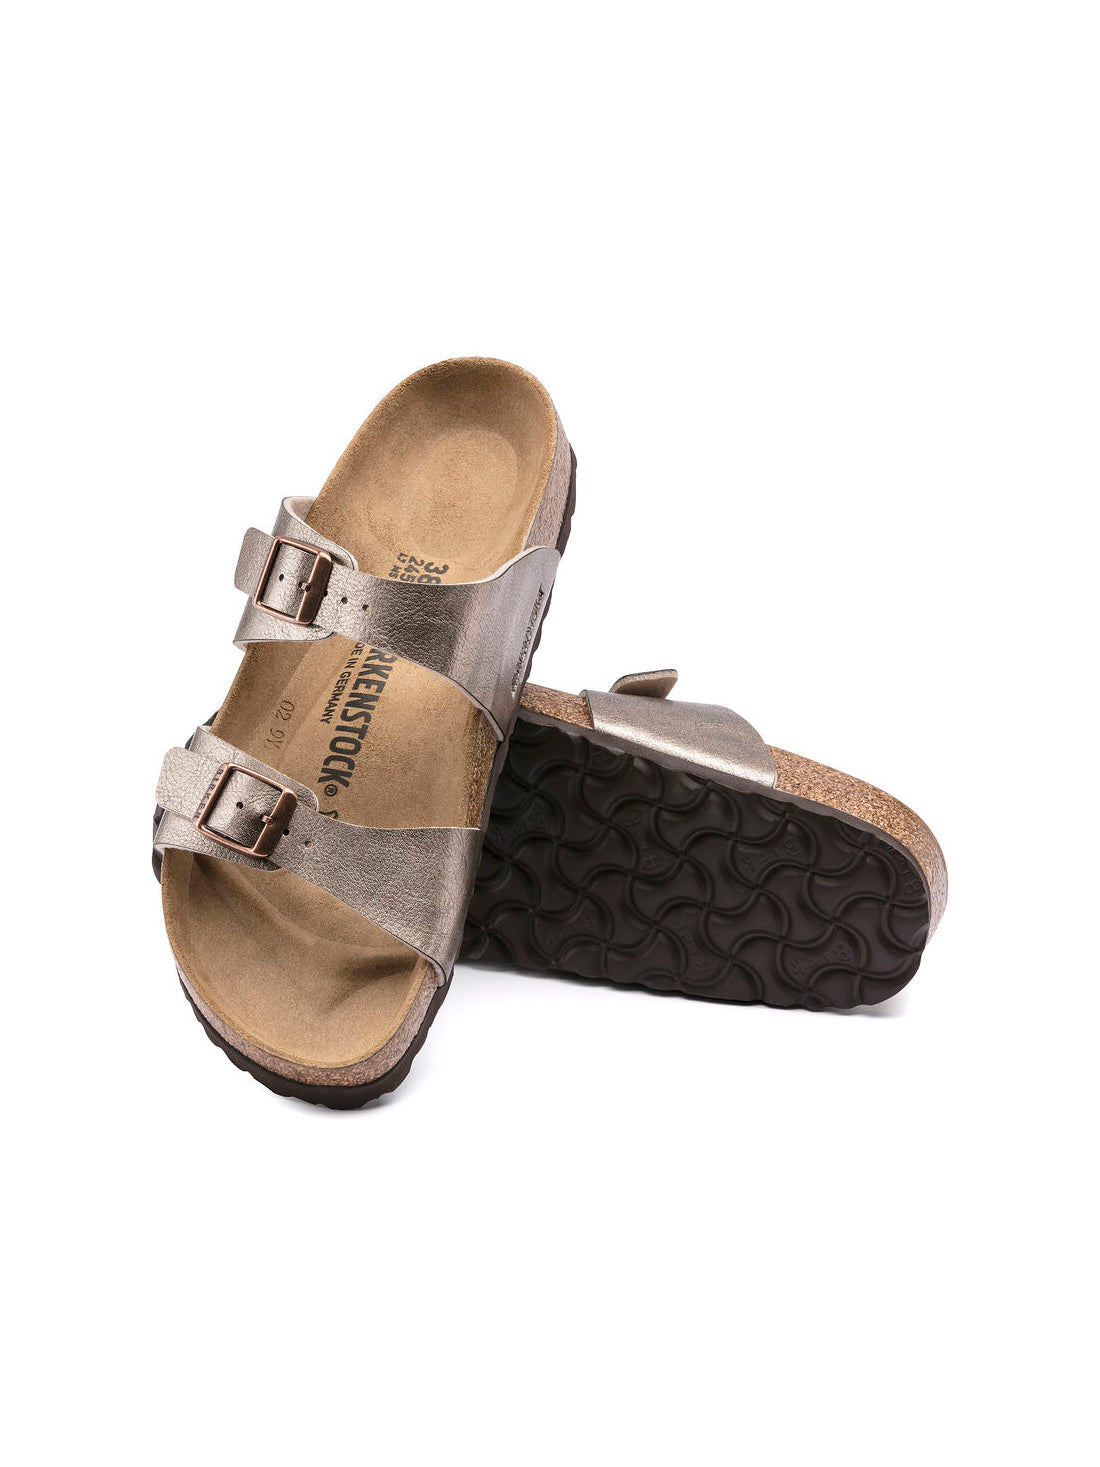 birkenstock sydney sandal in birko-flor graceful taupe regular